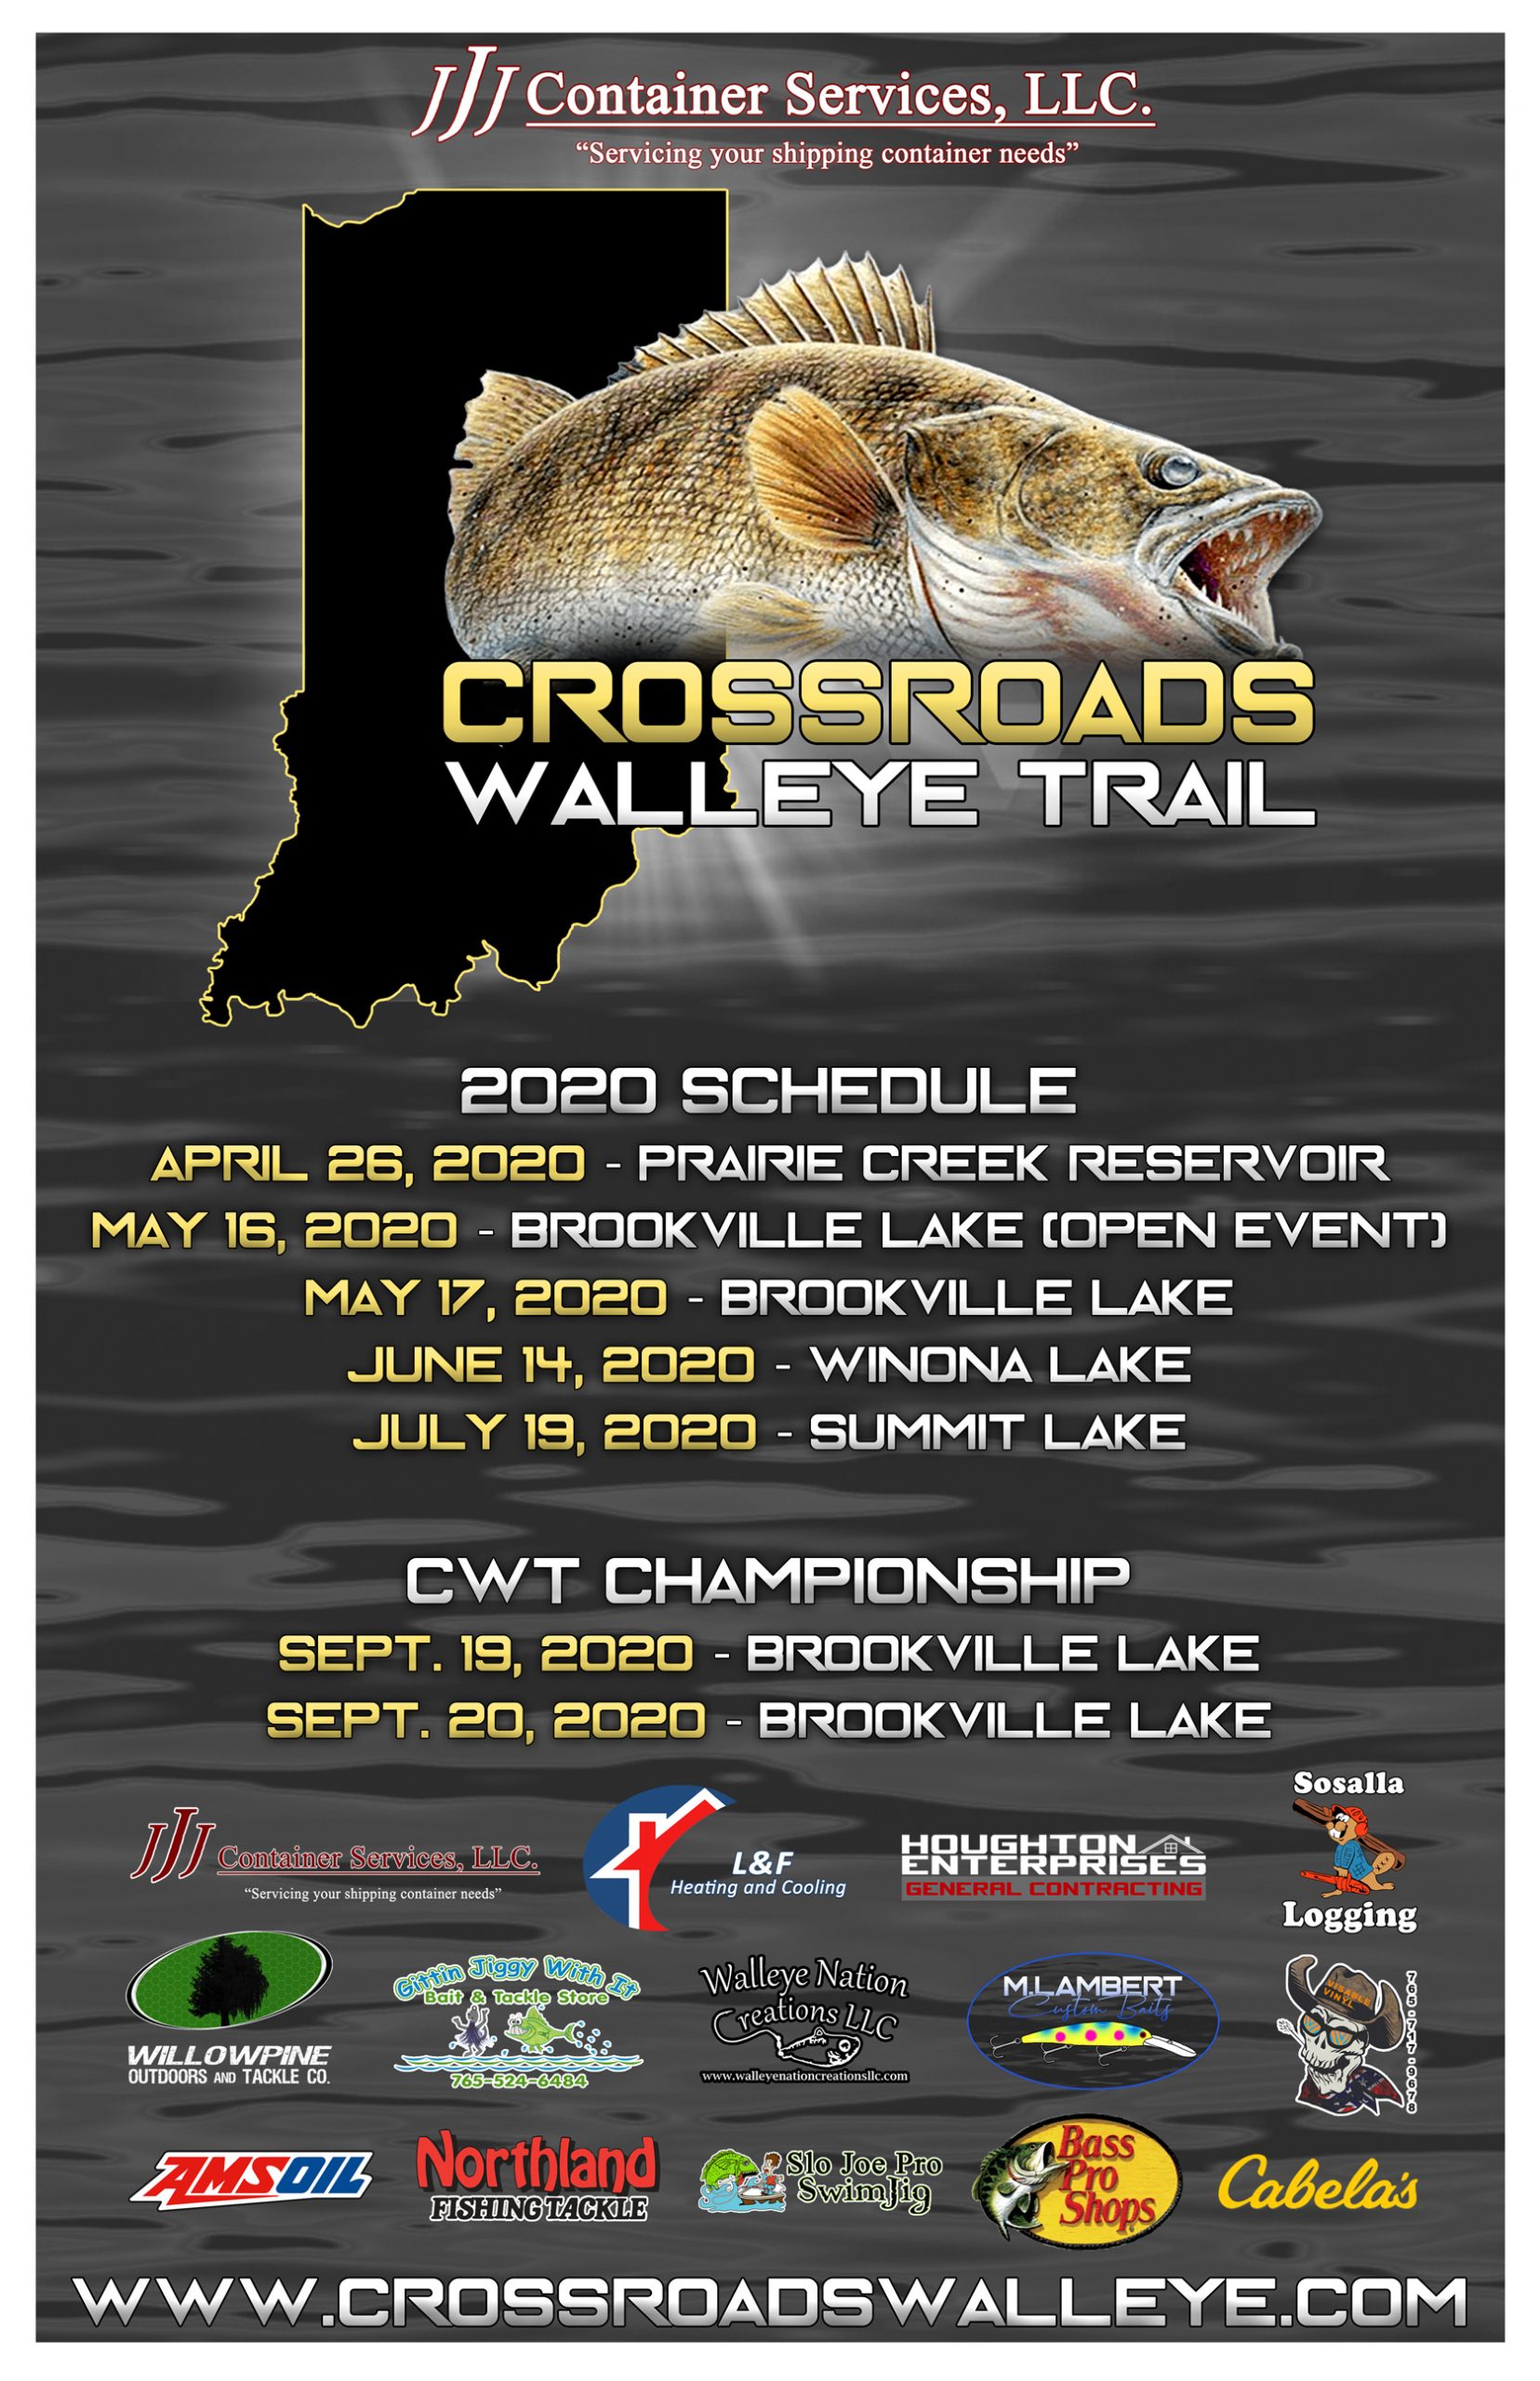 New Indiana Walleye Club and Tournament Trail, Crossroads Walleye